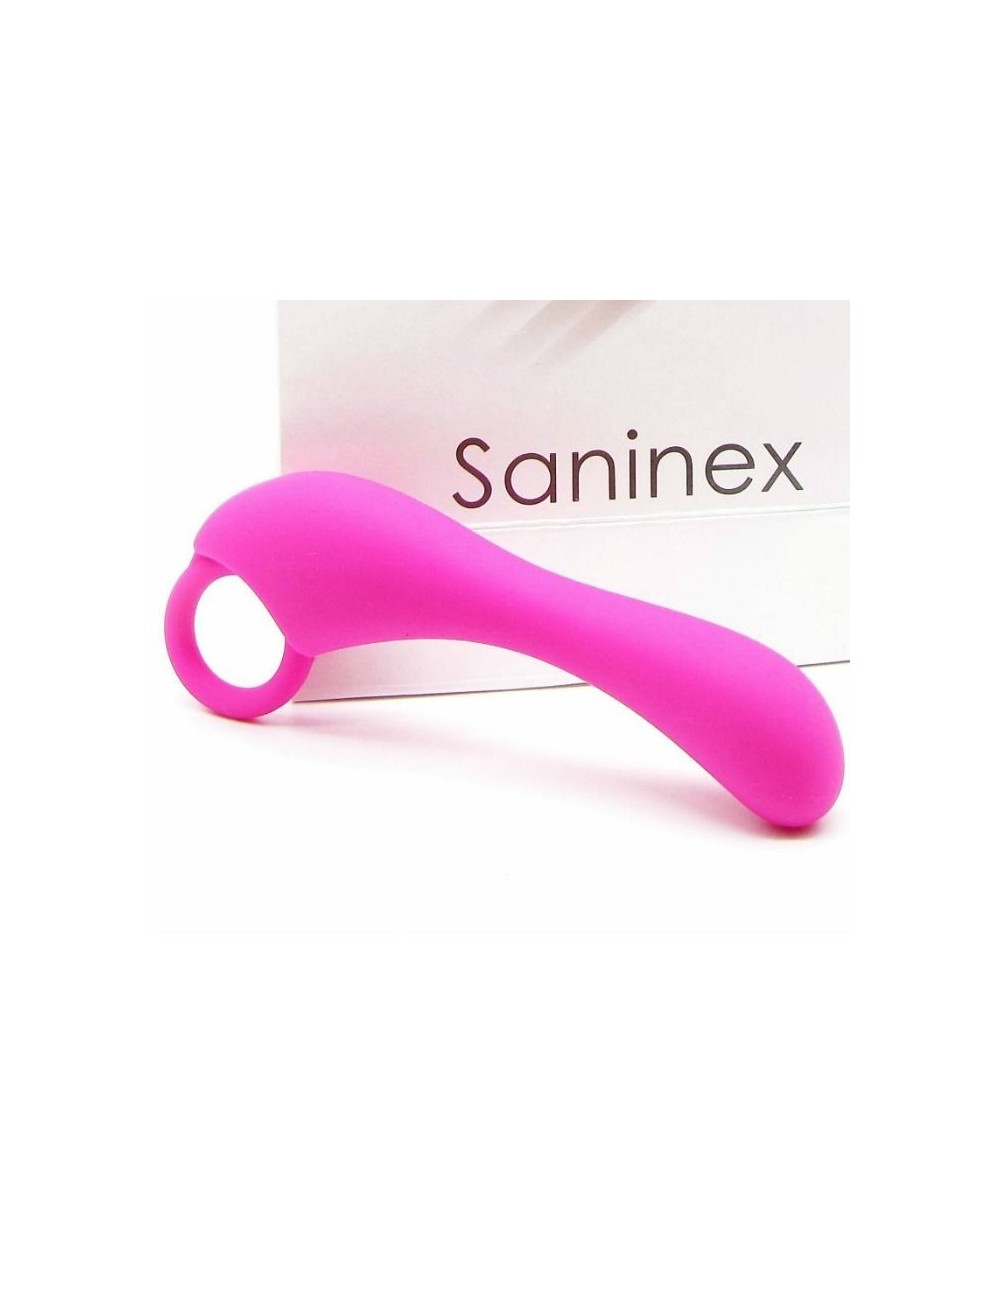 Sextoys - Godes & Plugs - STIMULATEUR SANINEX DUPLEX SEXE ANAL ORGASMIQUE UNISEXE ROSE - SANINEX SEXTOYS